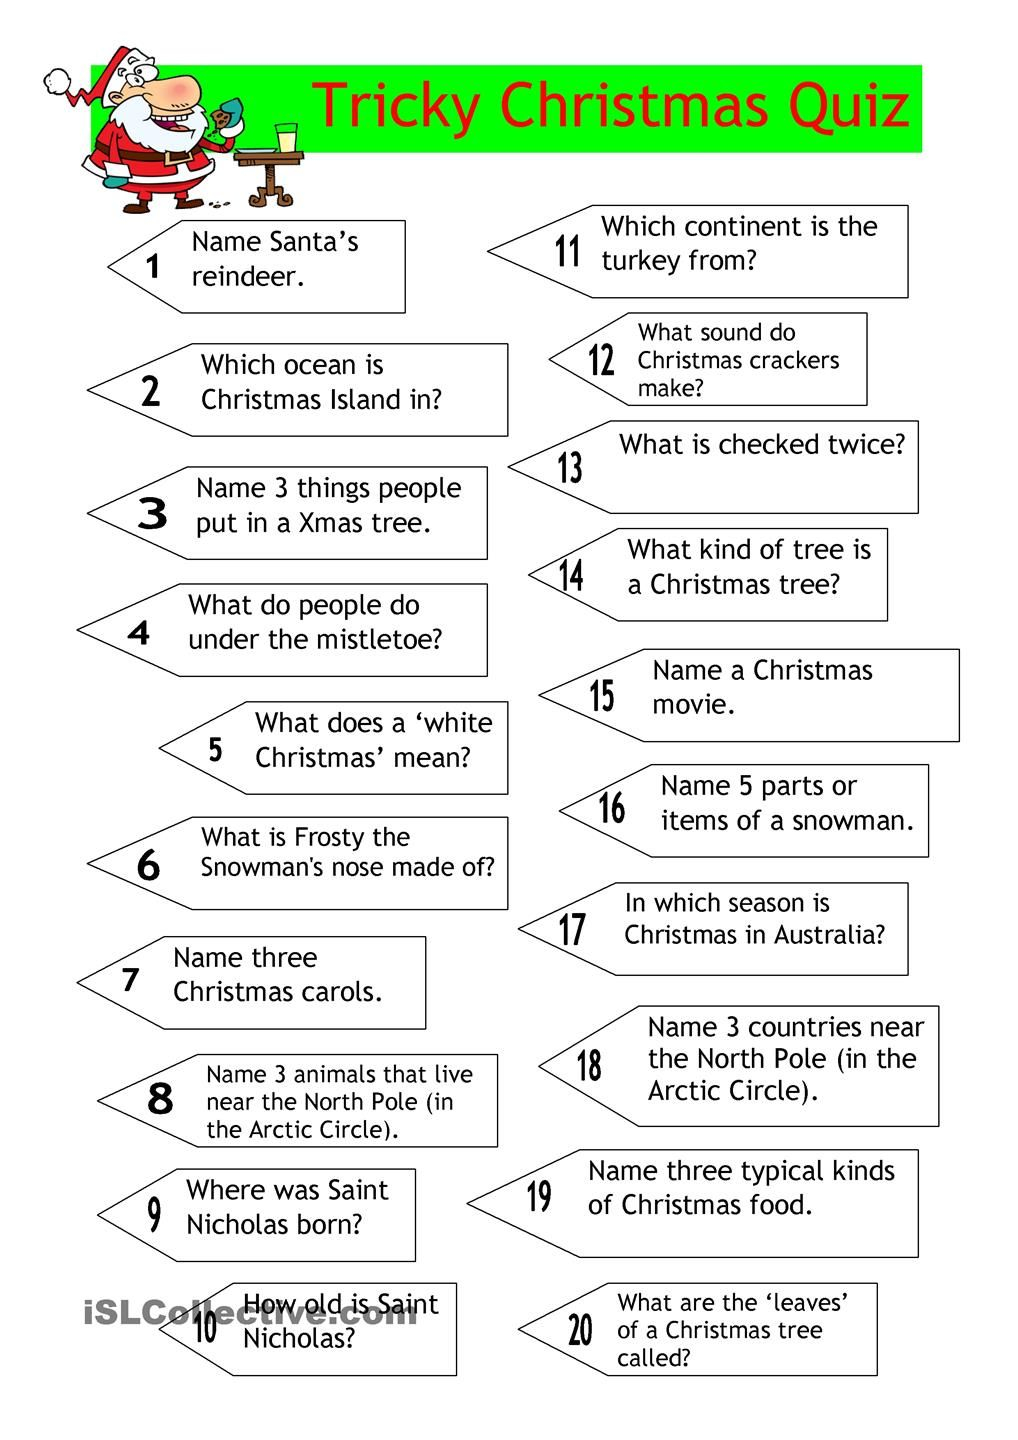 Quiz - Tricky Christmas Quiz | Christmas Trivia, Christmas